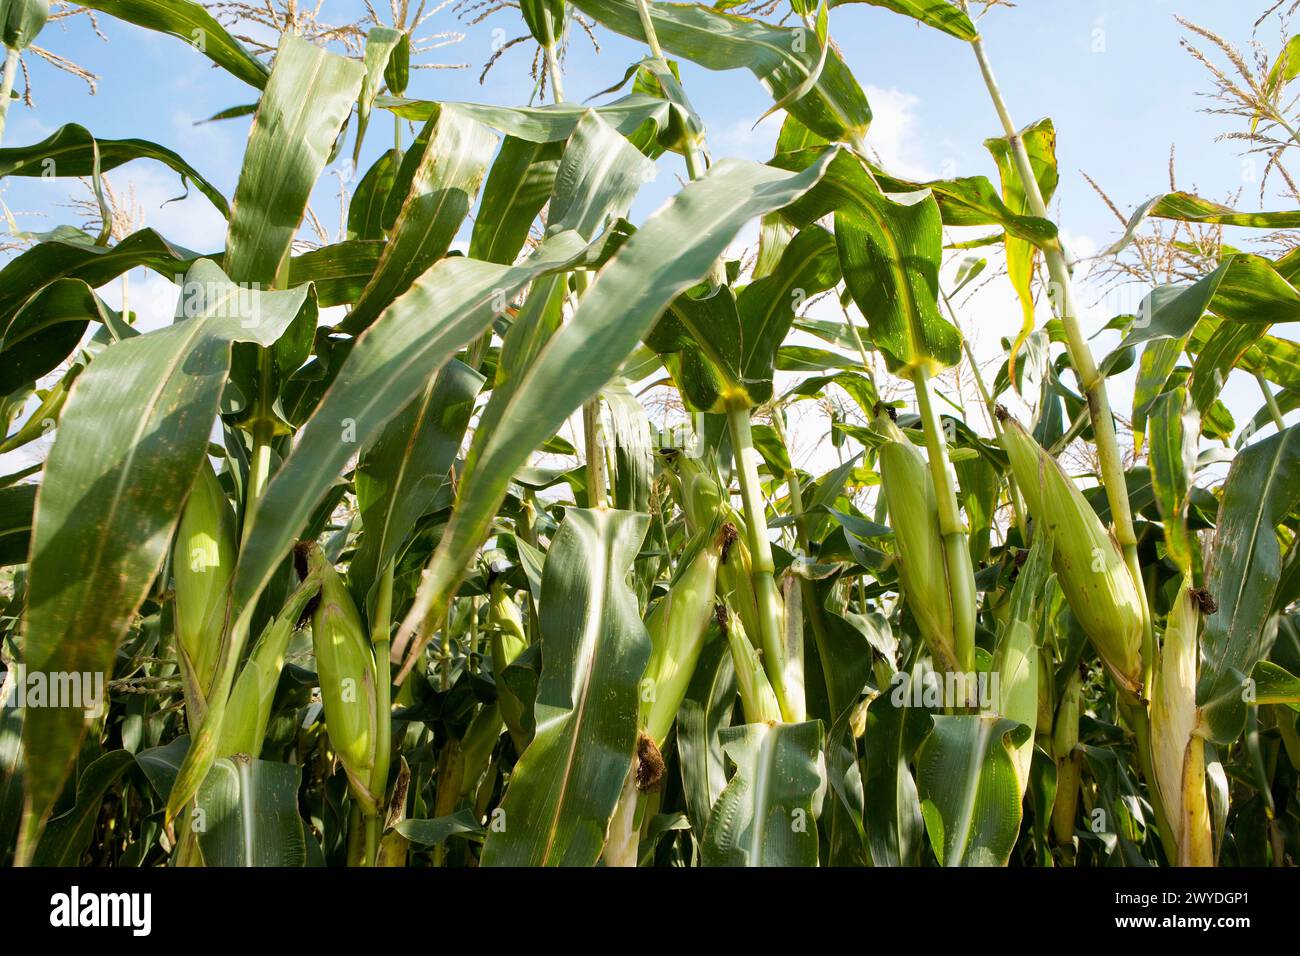 Corn harvesting, Oco near Estella. Navarra, Spain. Stock Photo